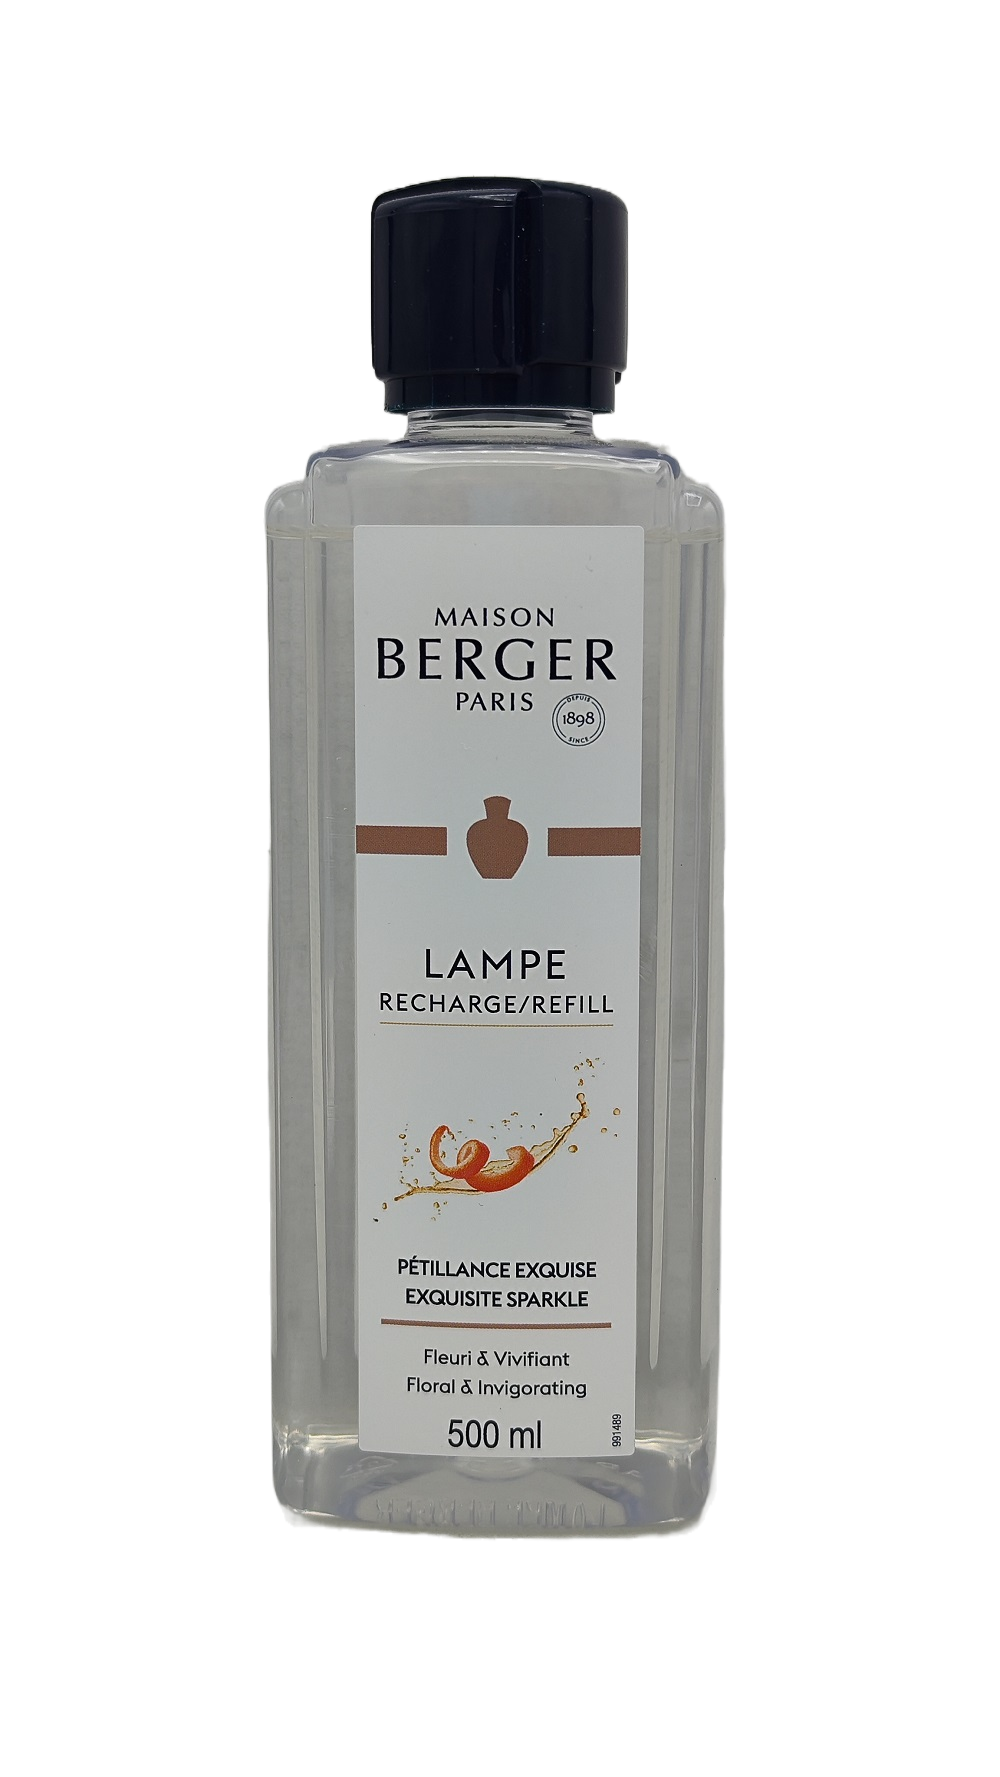 Exquisite Sparkle - Lampe Berger Refill 500 ml - Maison Berger